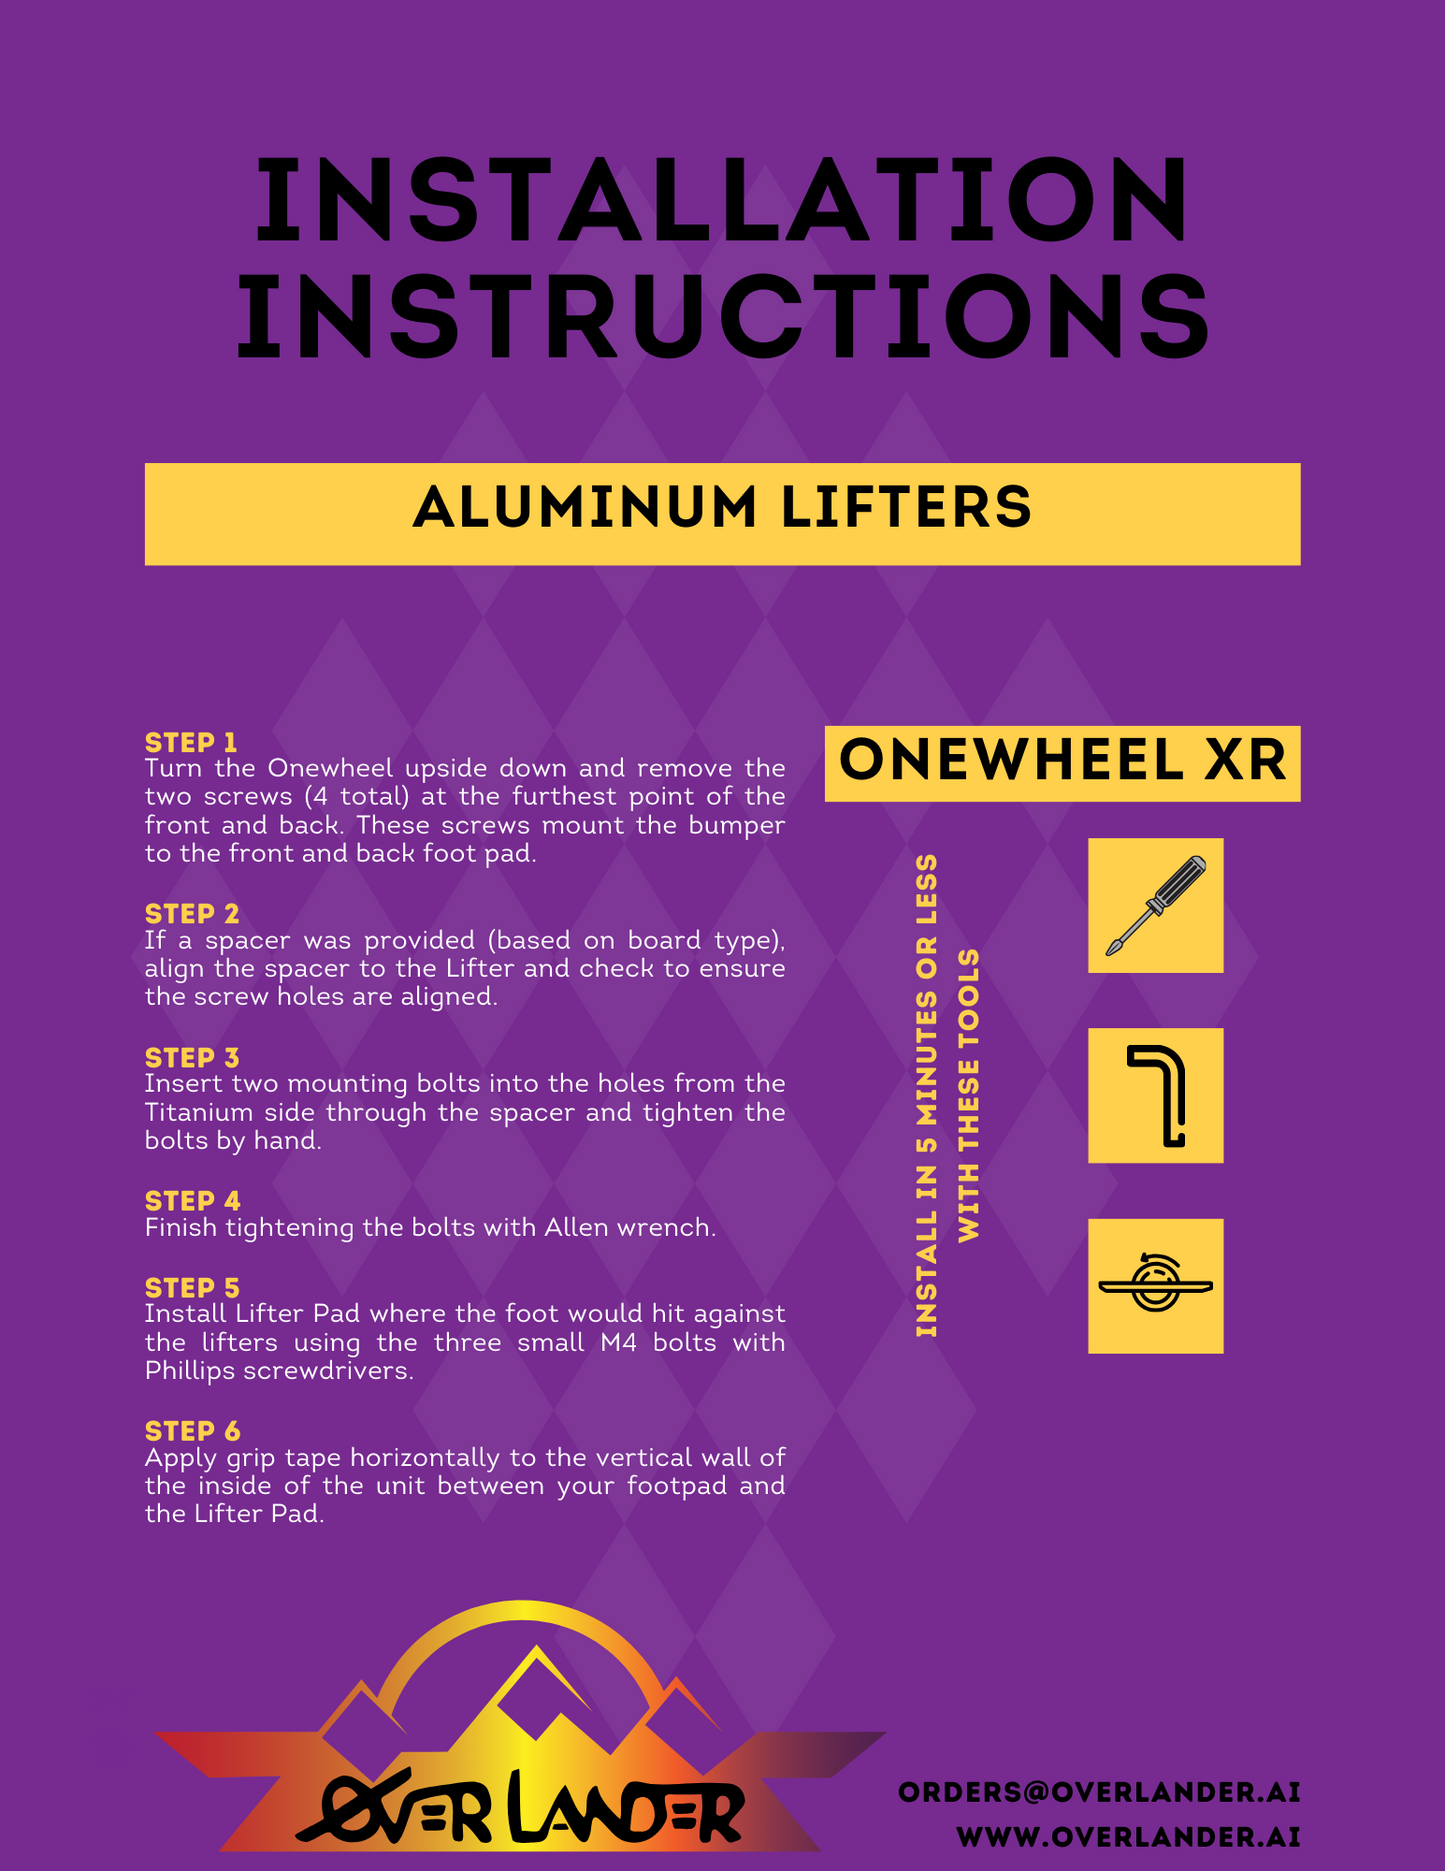 OG Aluminum Lifters for Onewheel XR/Plus